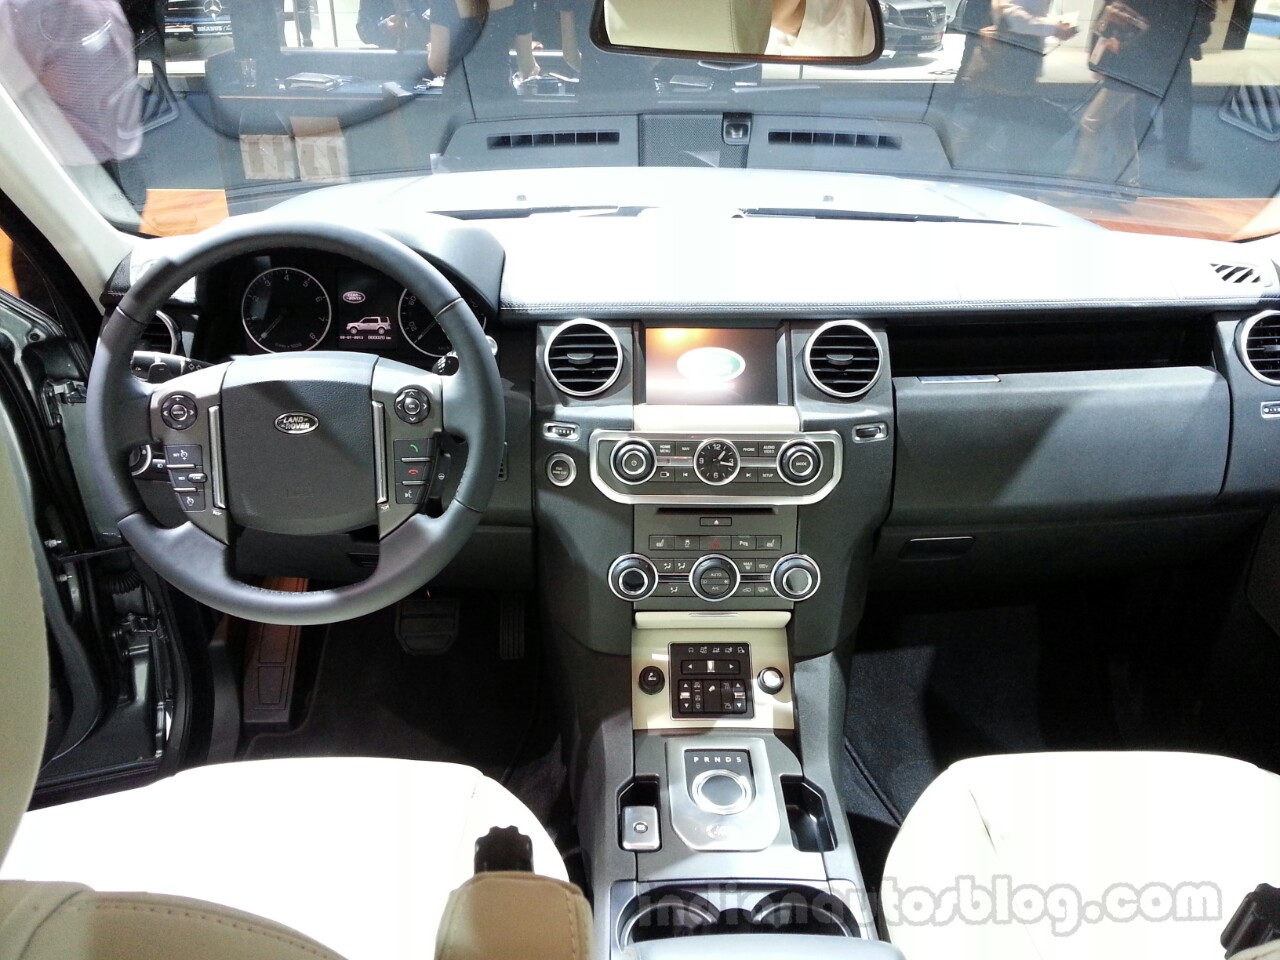 2014 Land Rover Discovery Frankfurt Live